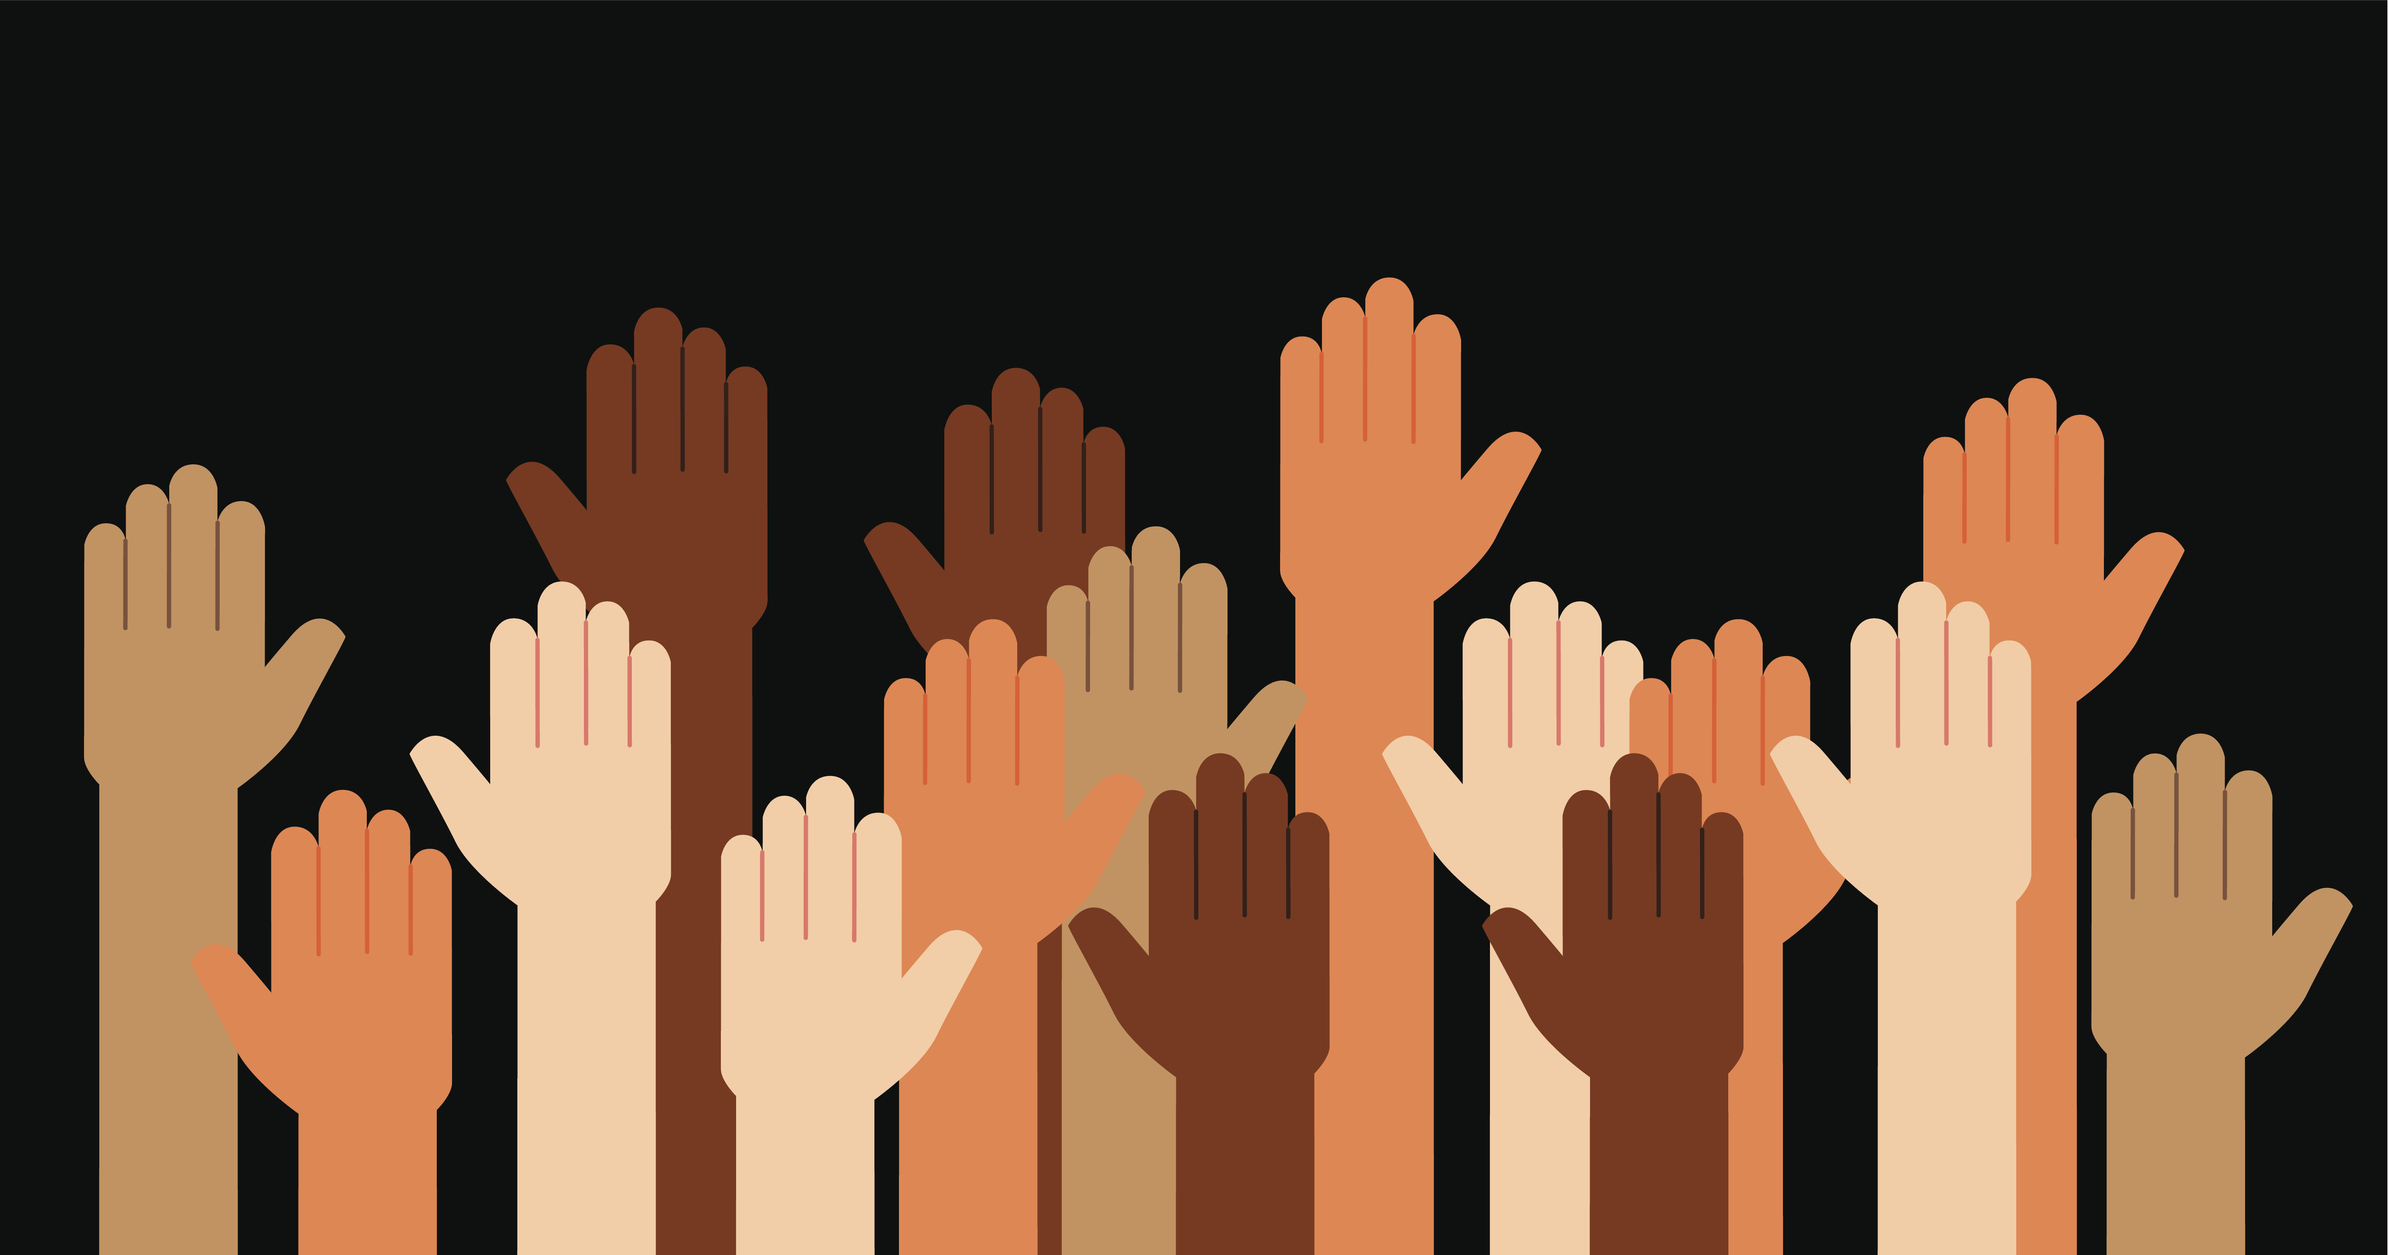 Multi-racial hands raised